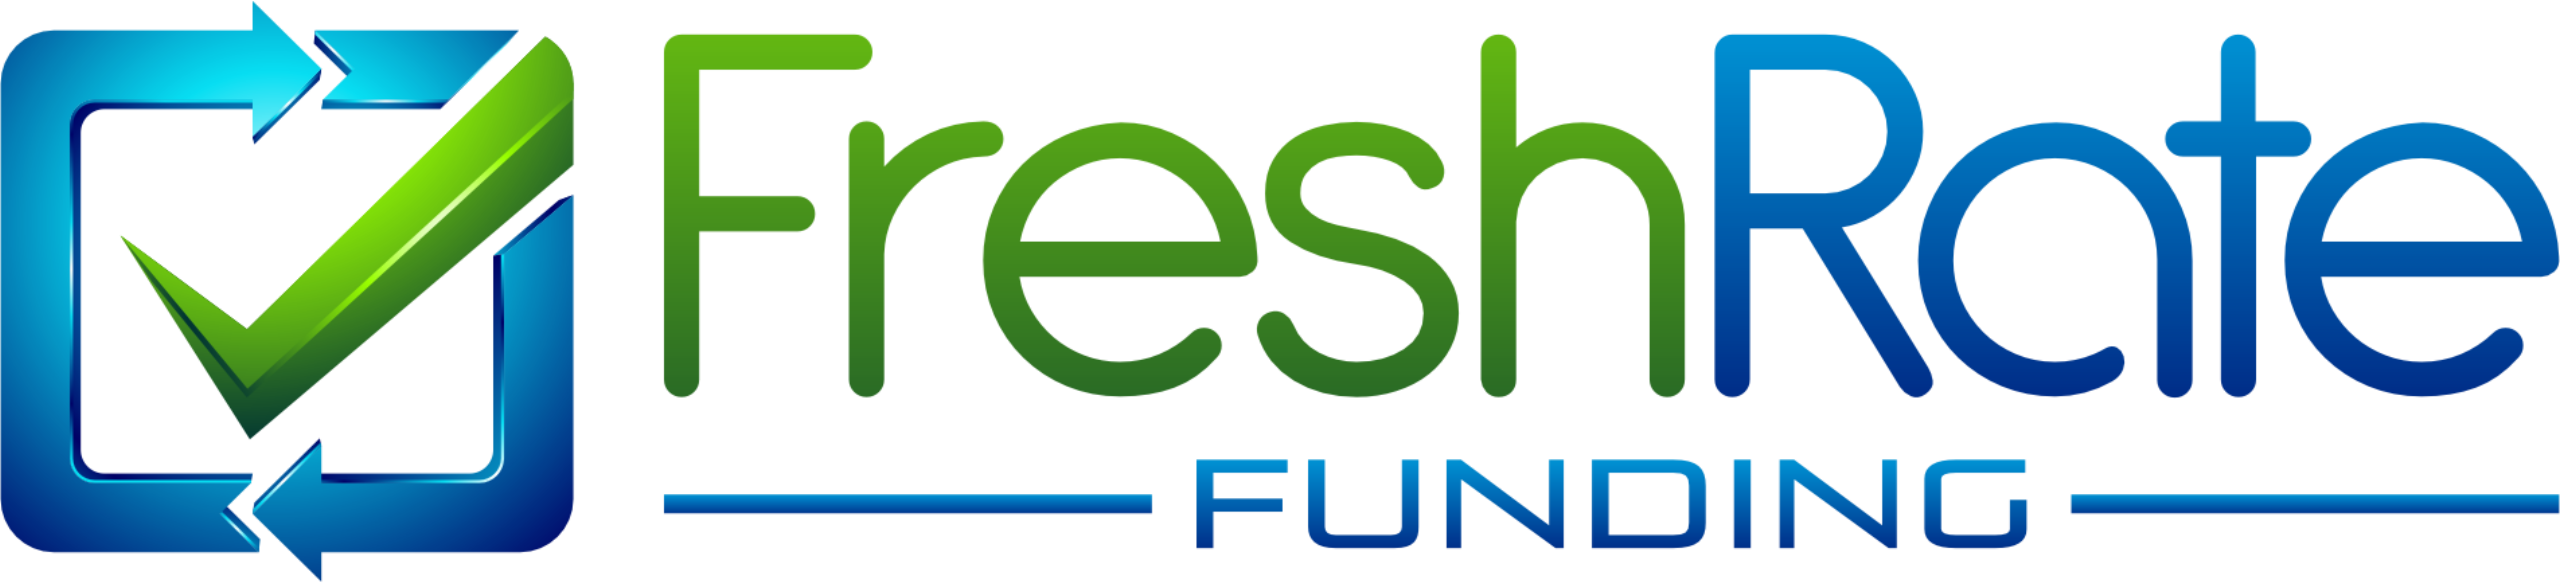 FreshRate Funding Logo